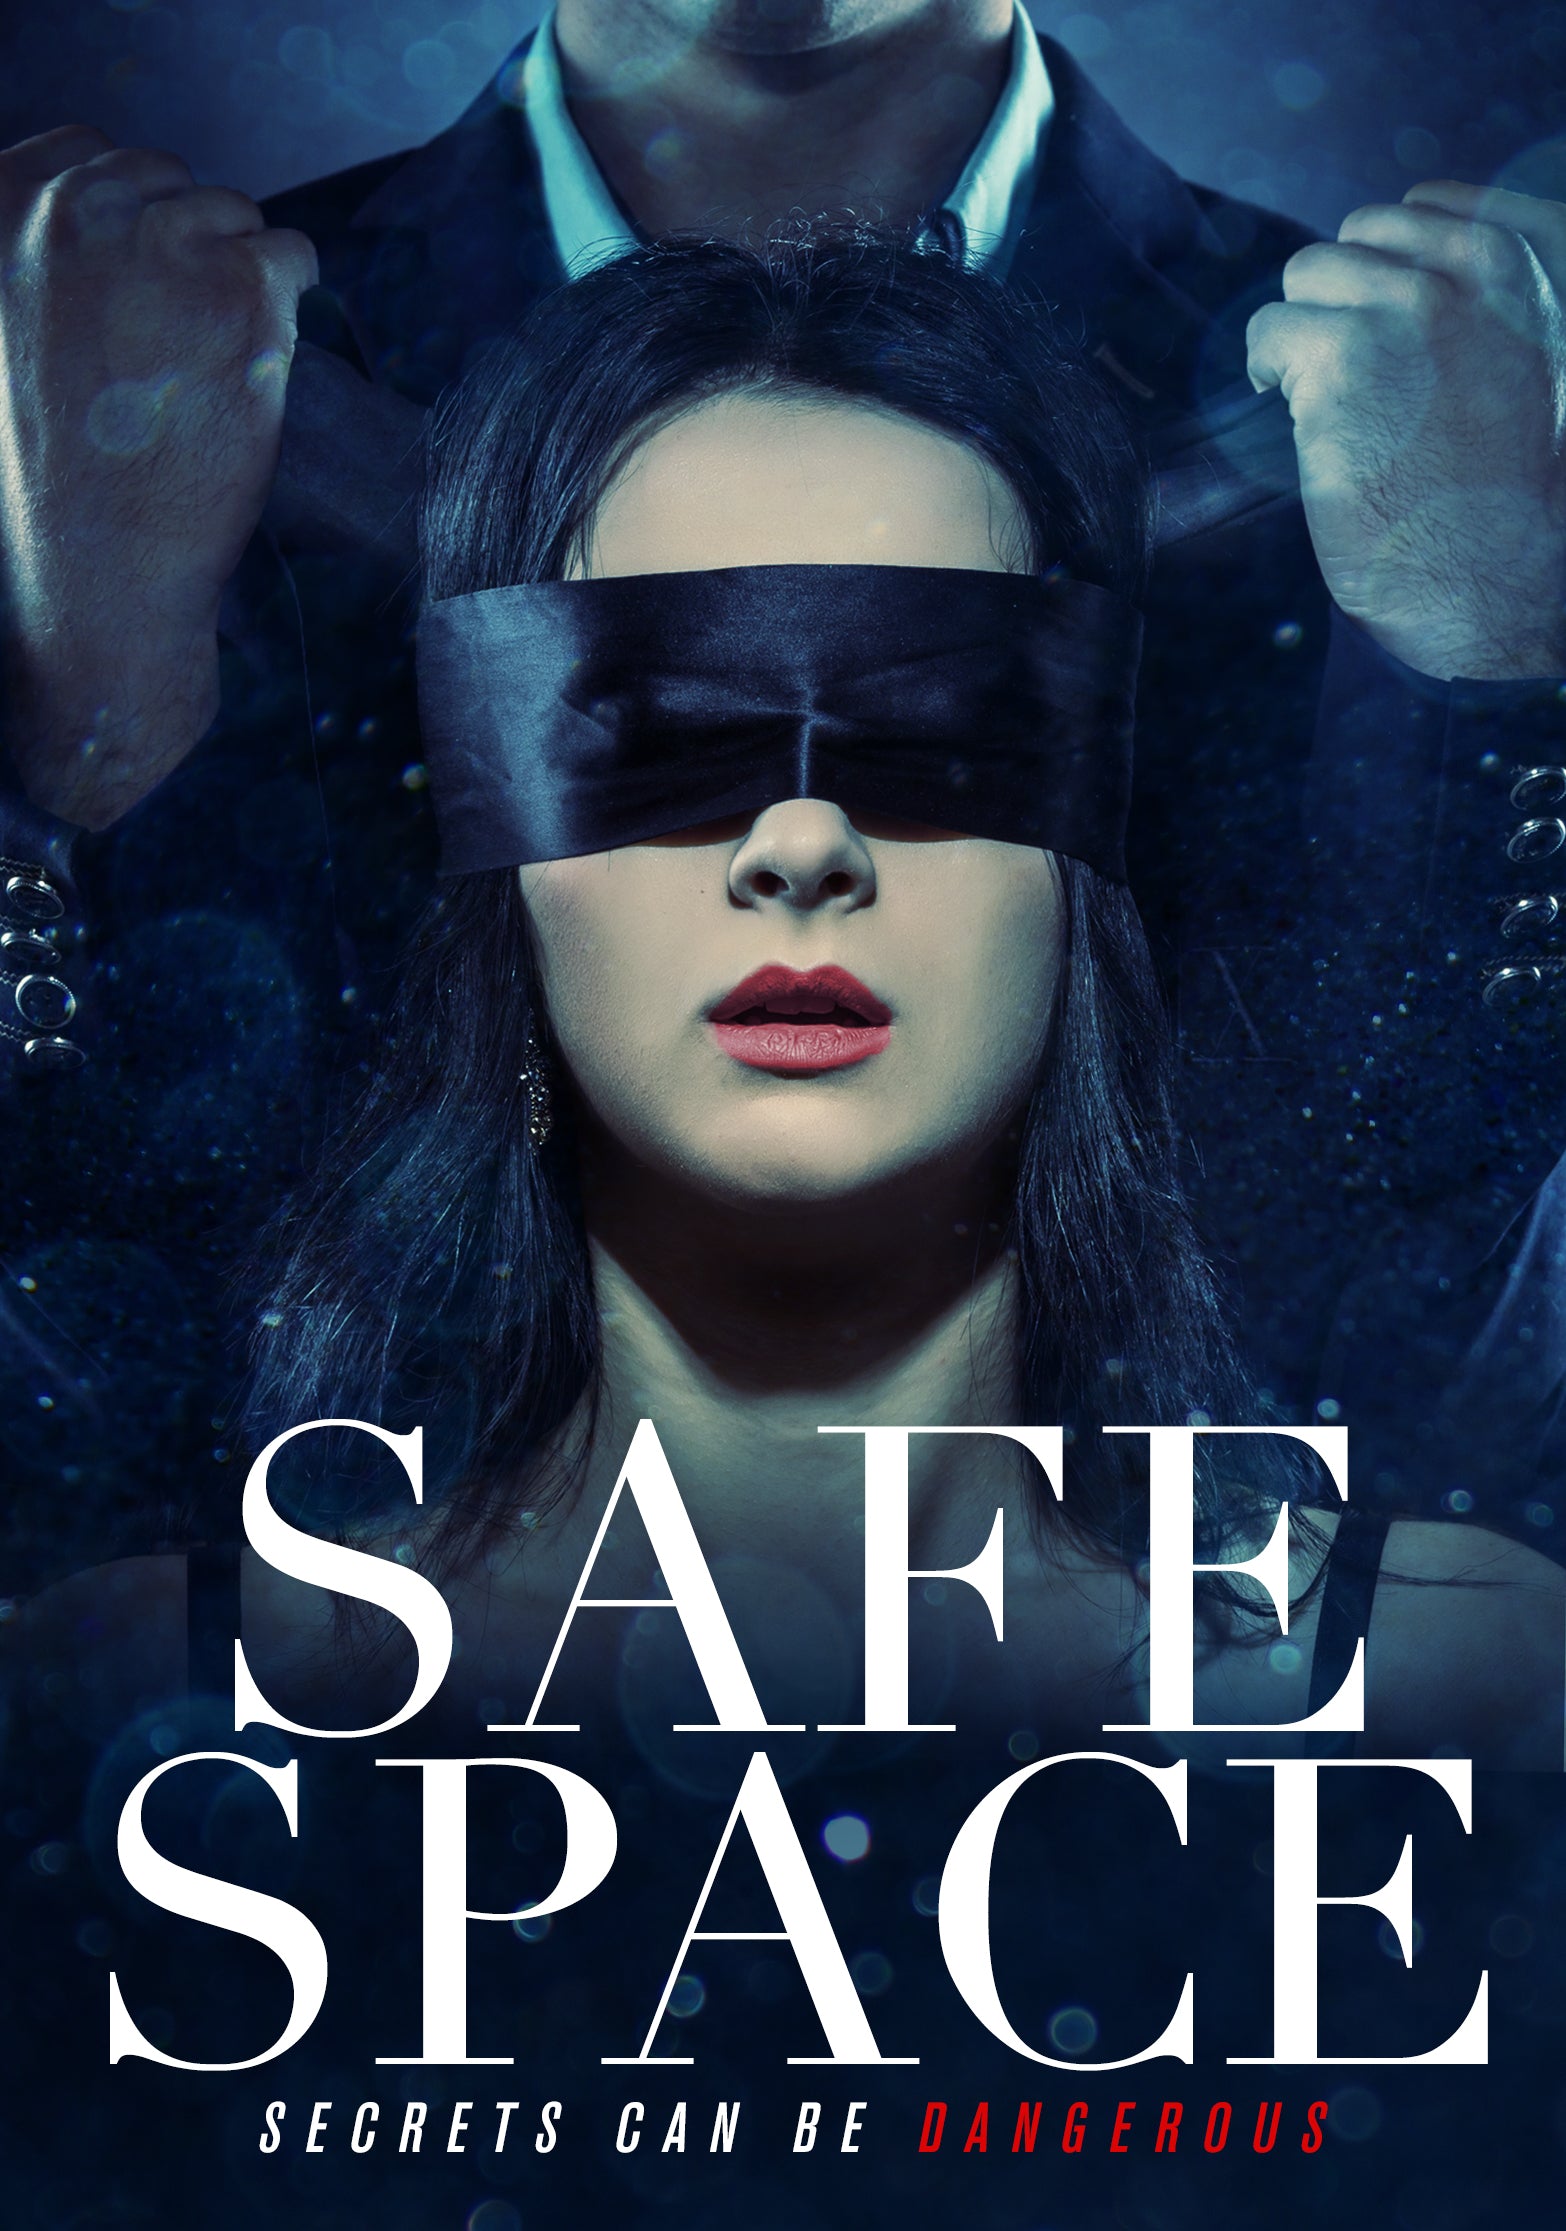 SAFE SPACE DVD